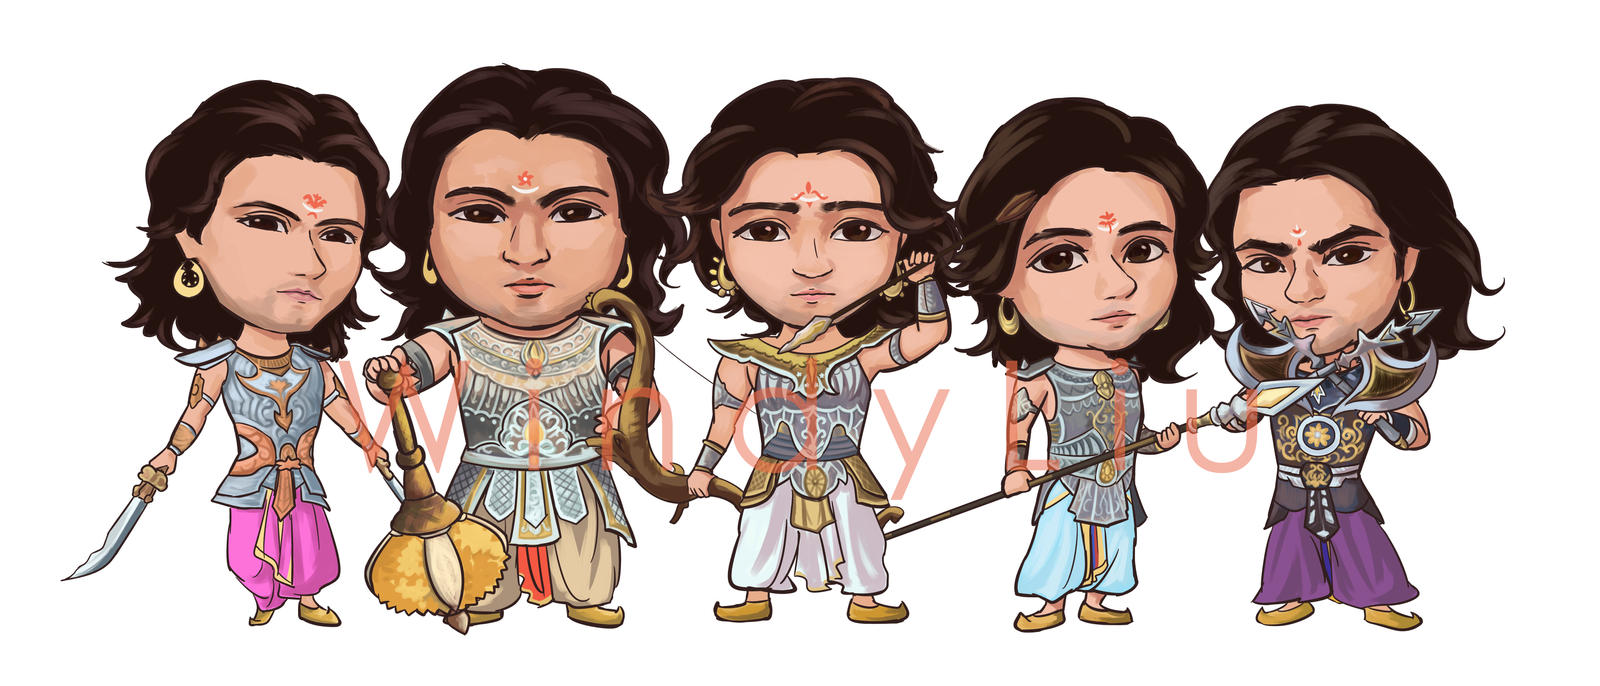 Pandavas of Mahabharat 2013 version by WindyLiu on DeviantArt